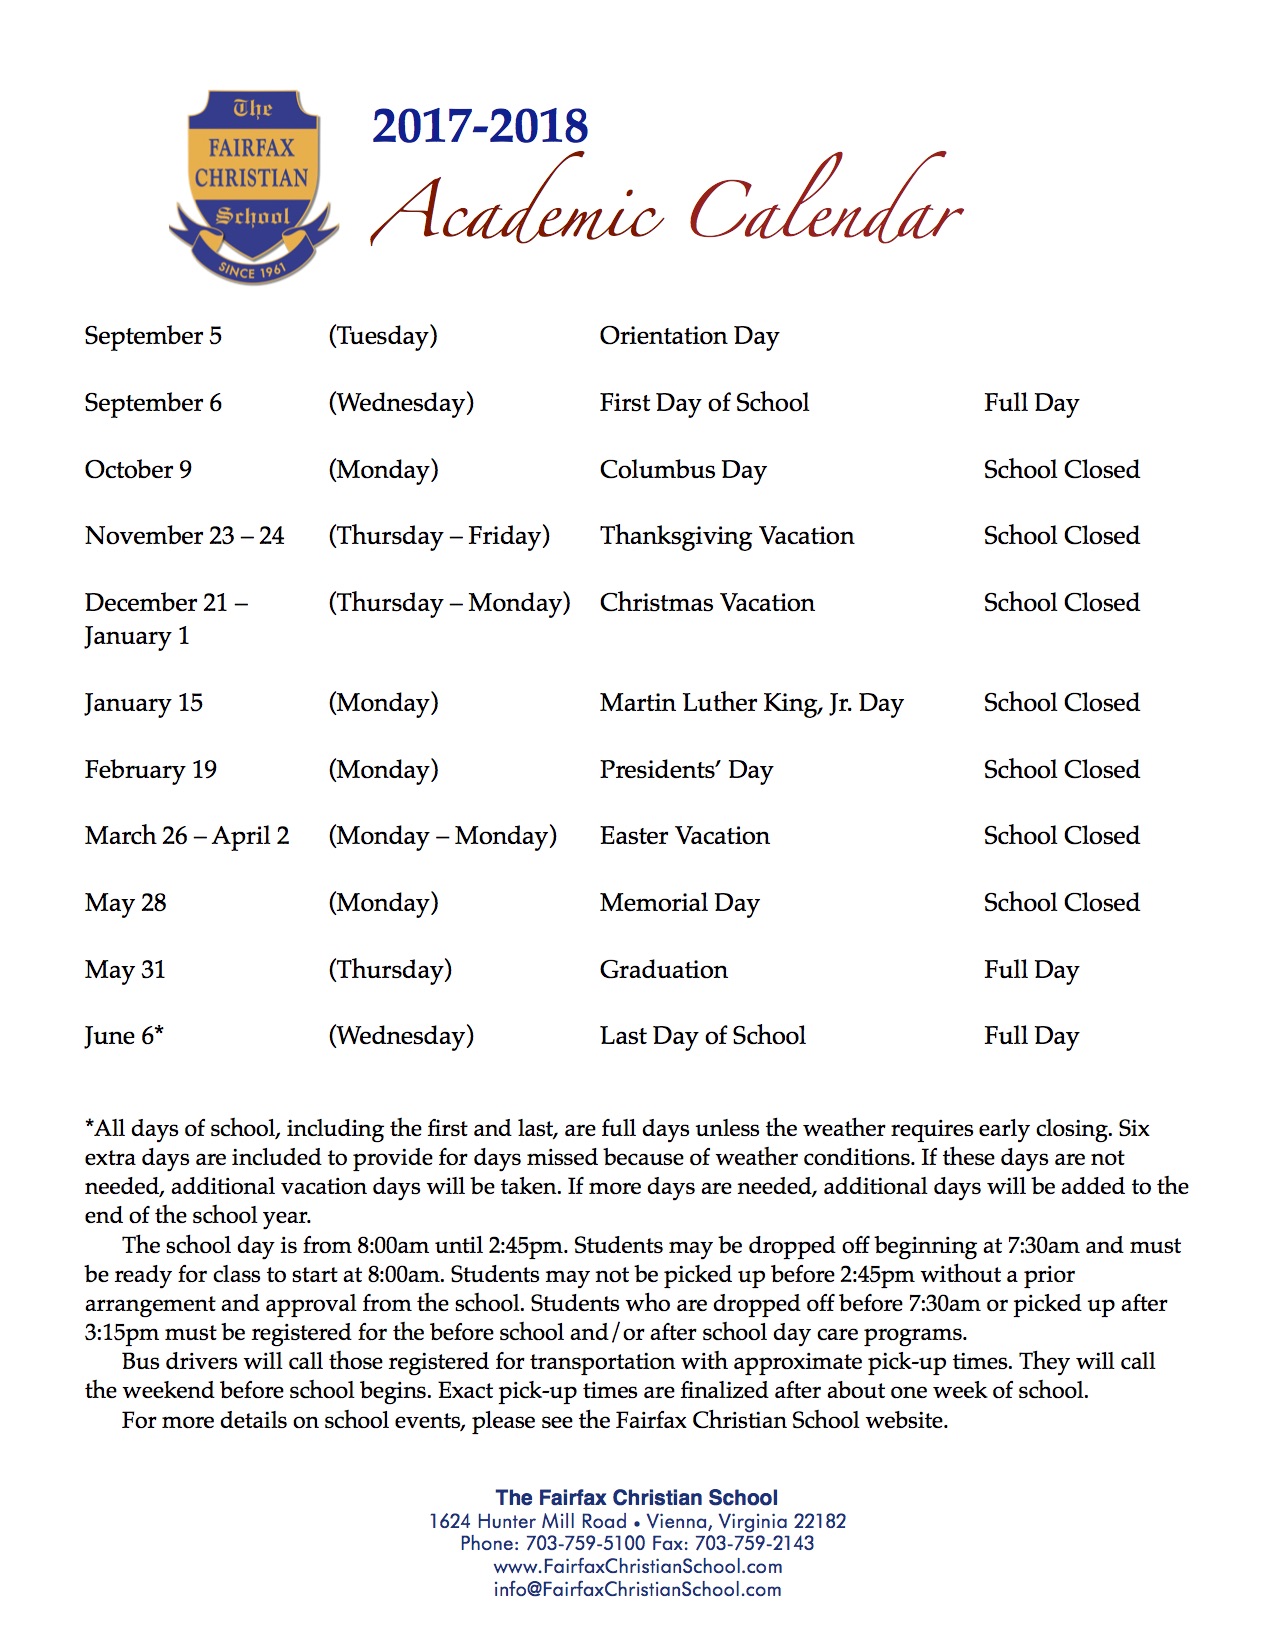 FCS 17-18 Academic Calendar